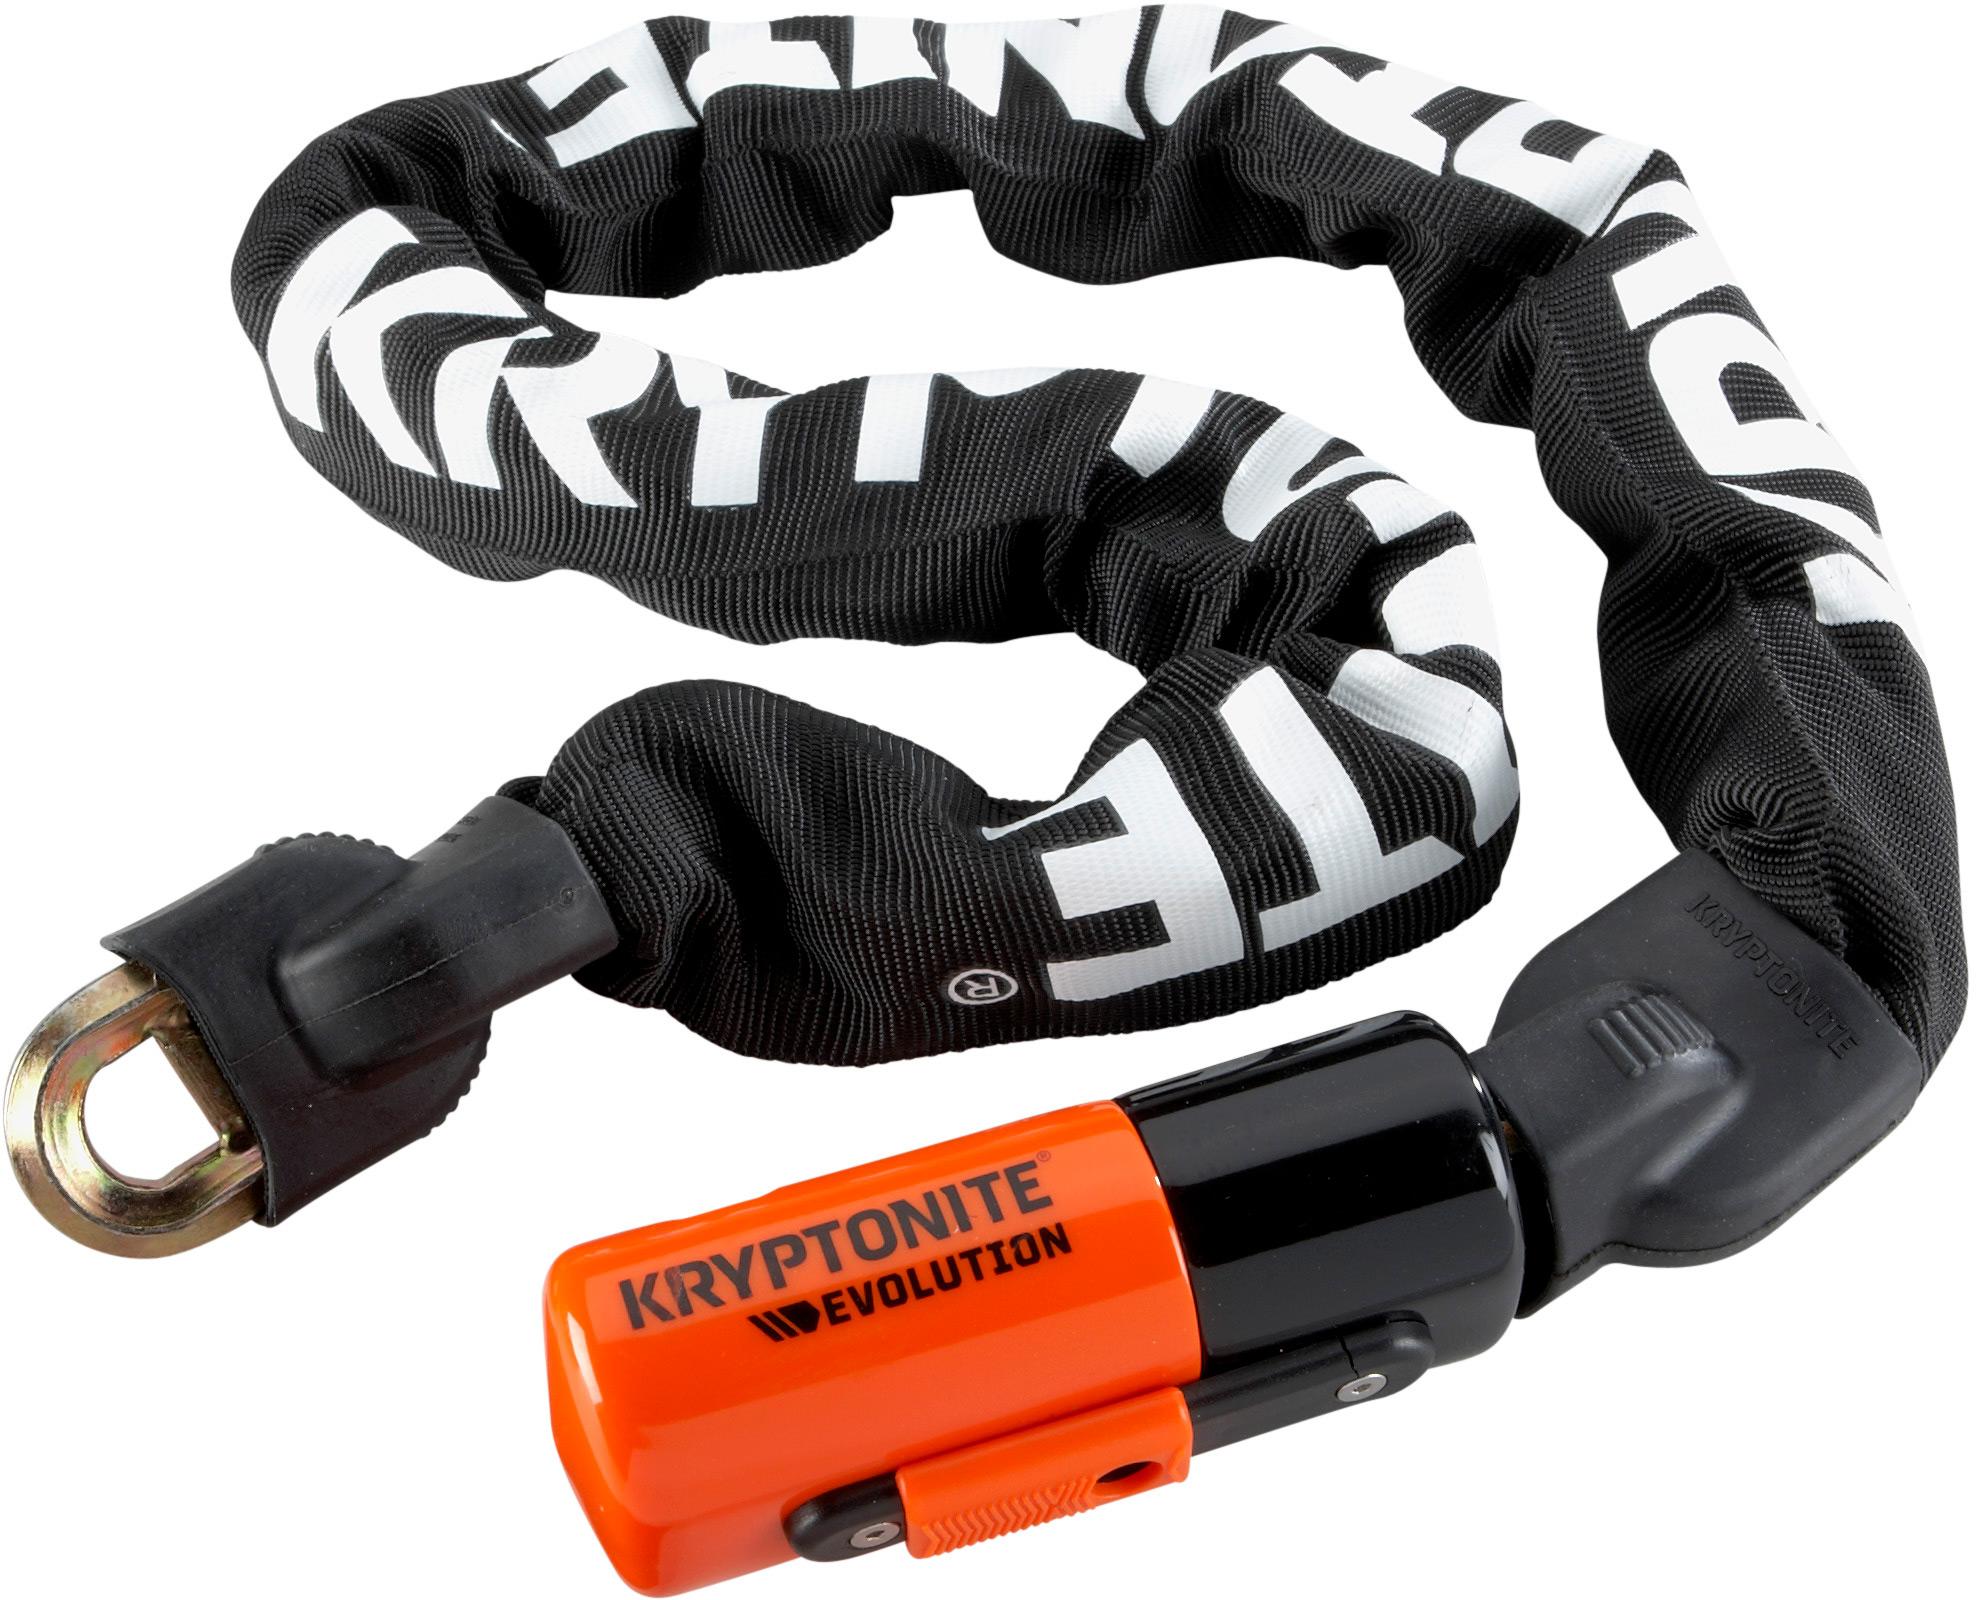 Kryptonite Evolution Series 4 1090 Chain Lock  Black/orange